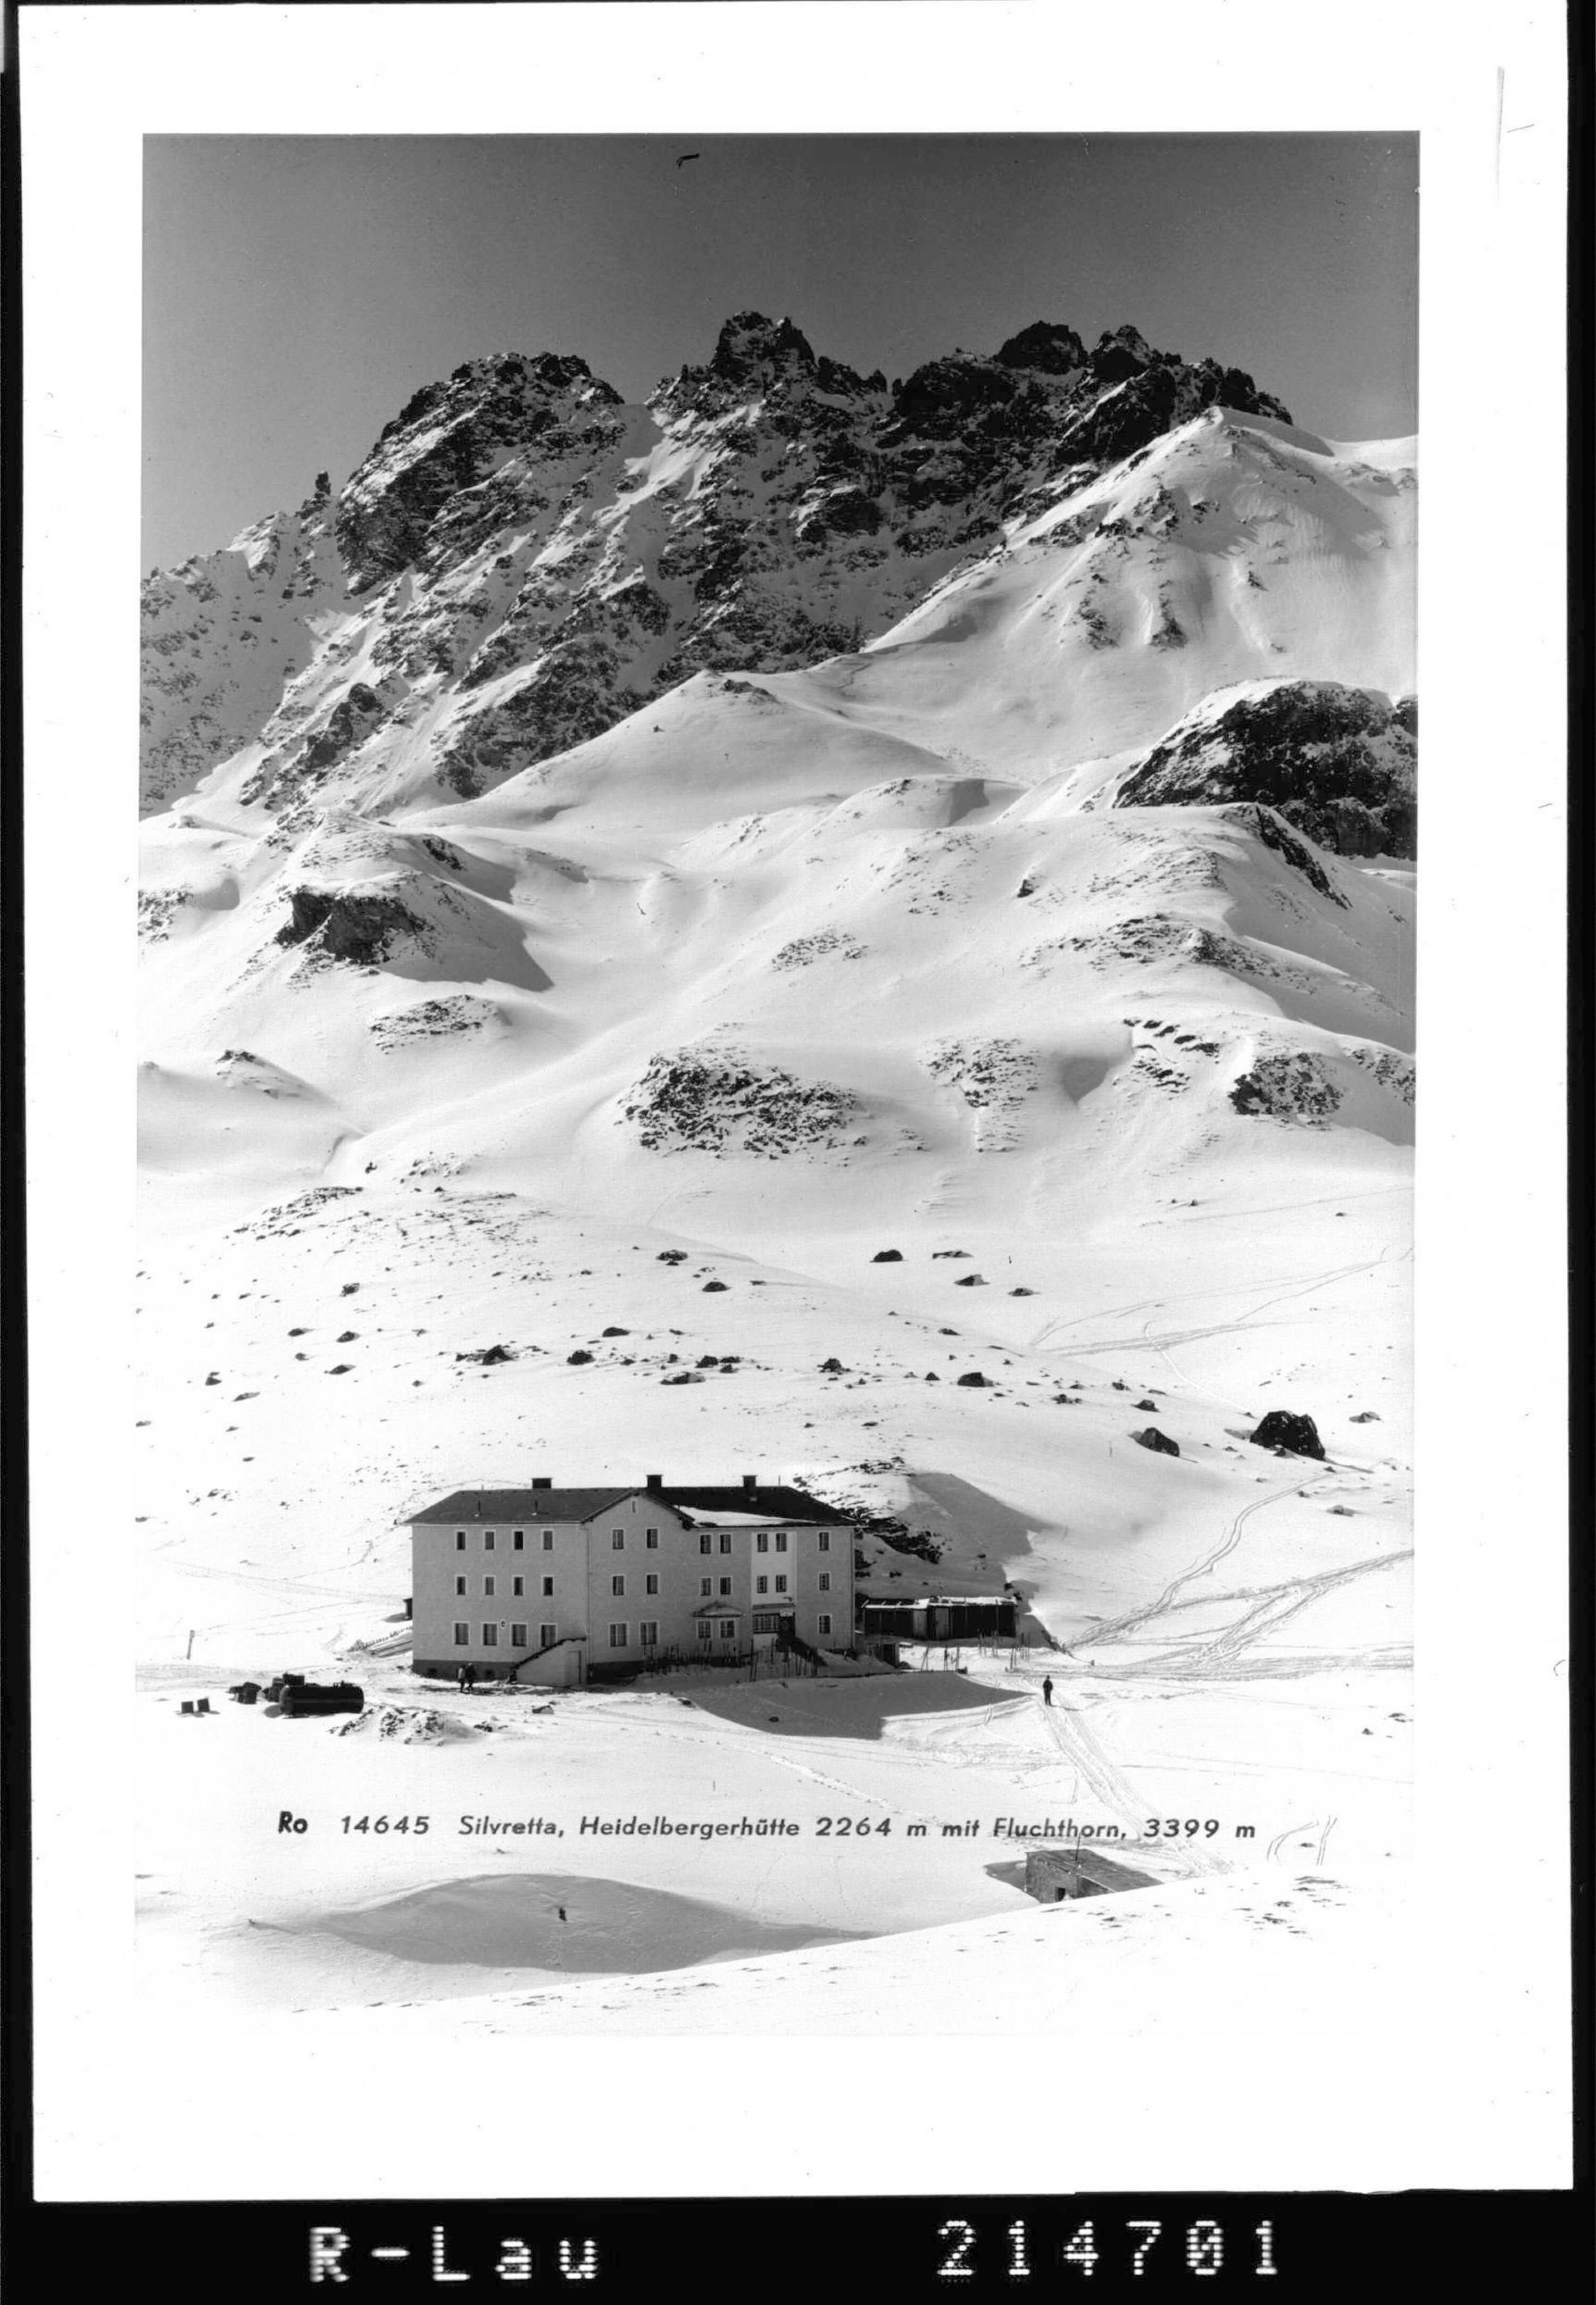 Silvretta, Heidelbergerhütte 2264 m mit Fluchthorn 3399 m></div>


    <hr>
    <div class=